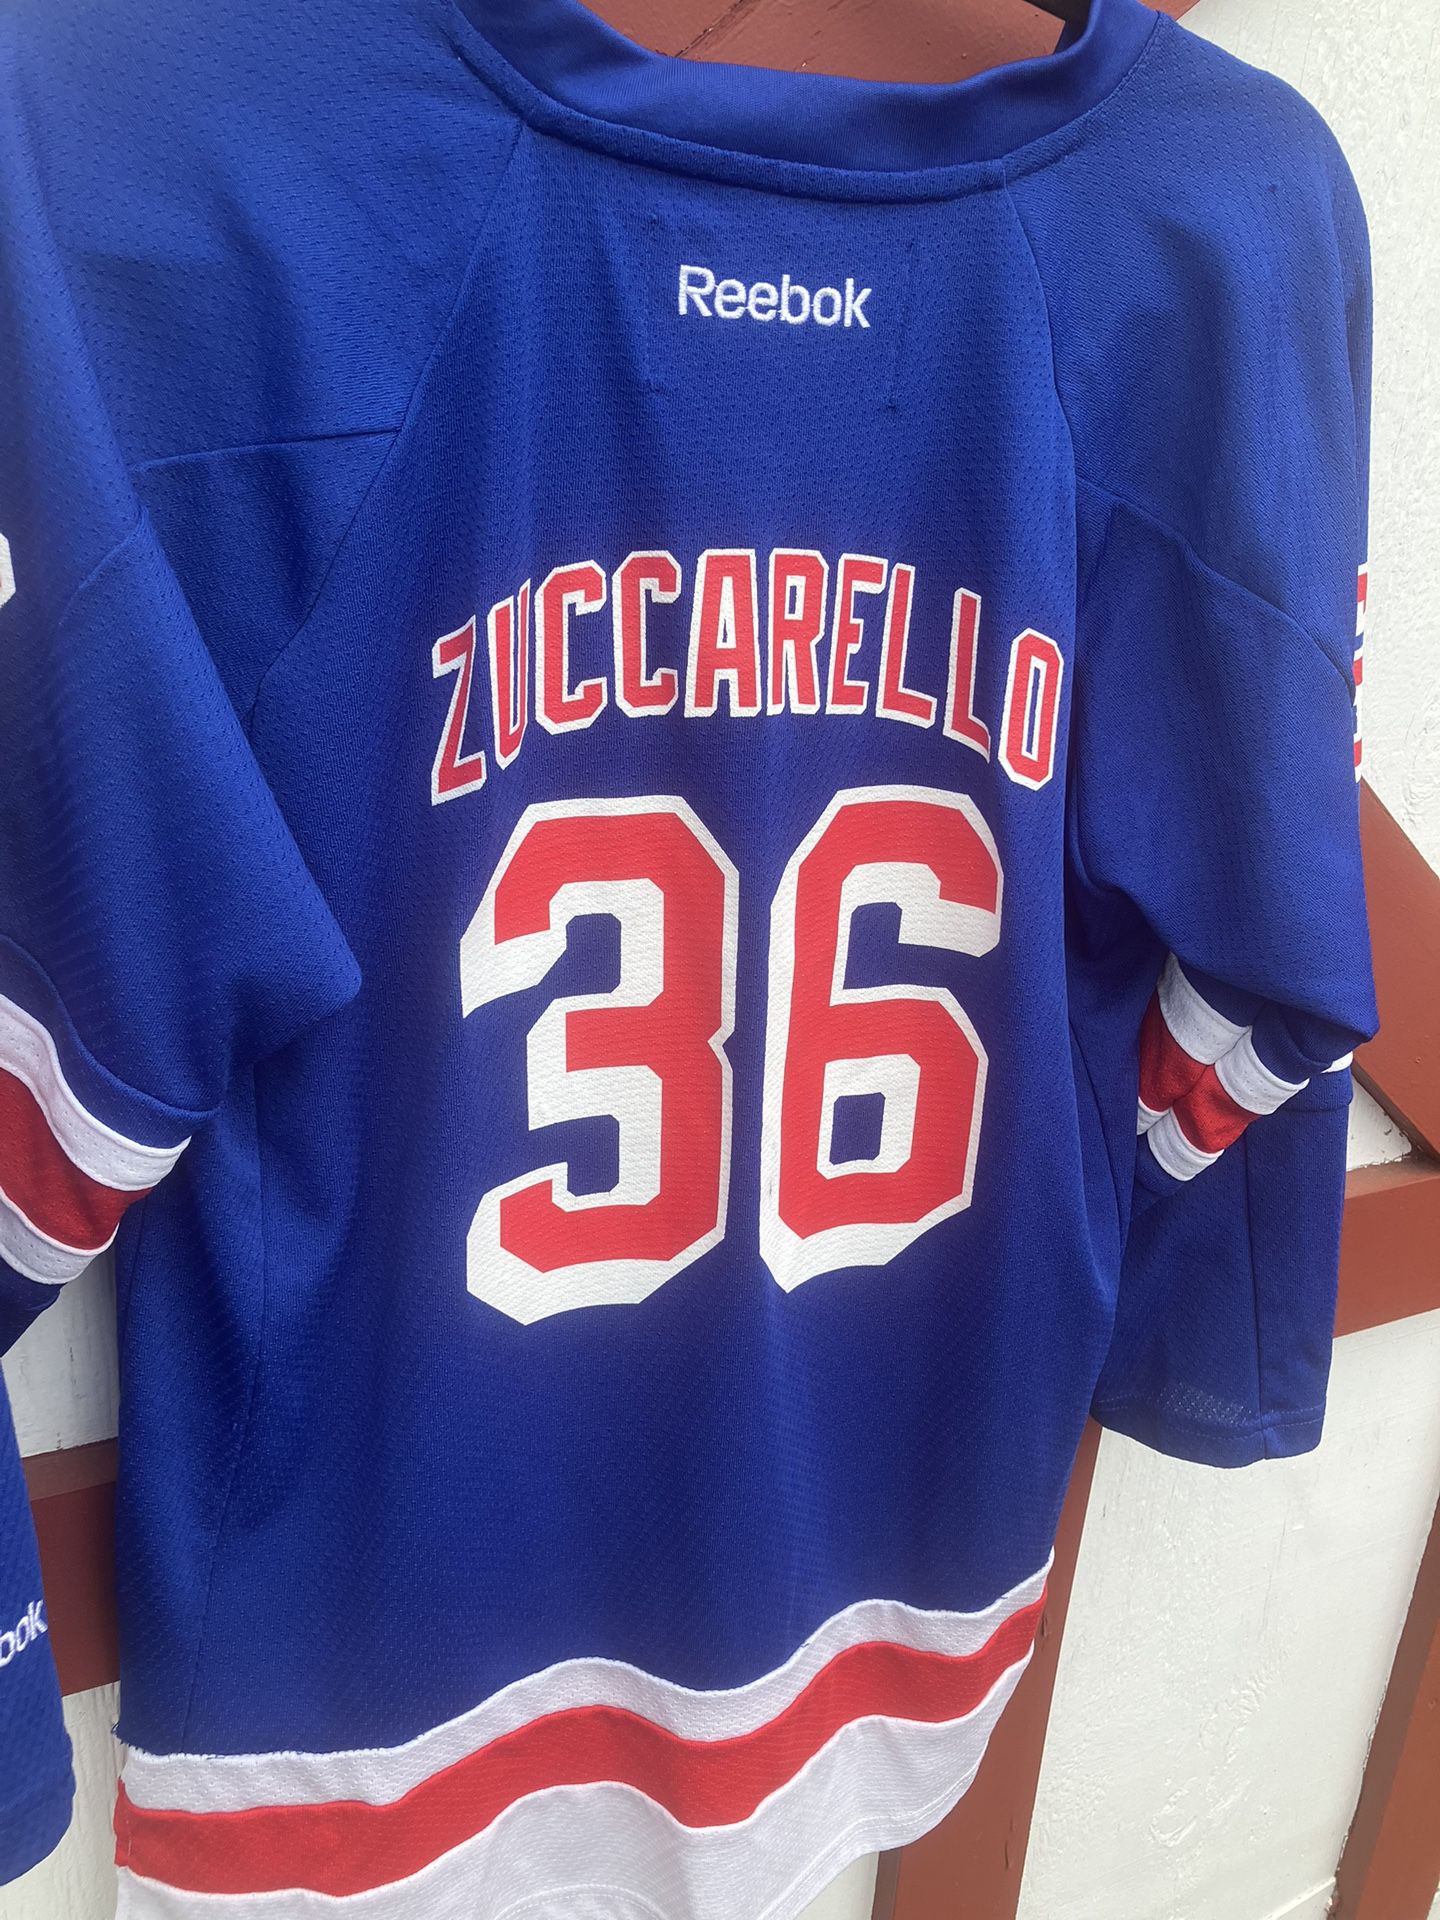 Mats Zuccarello #36 Reebok NHL New York Rangers Hockey Jersey Youth Size  L/XL for Sale in Park Ridge, NJ - OfferUp